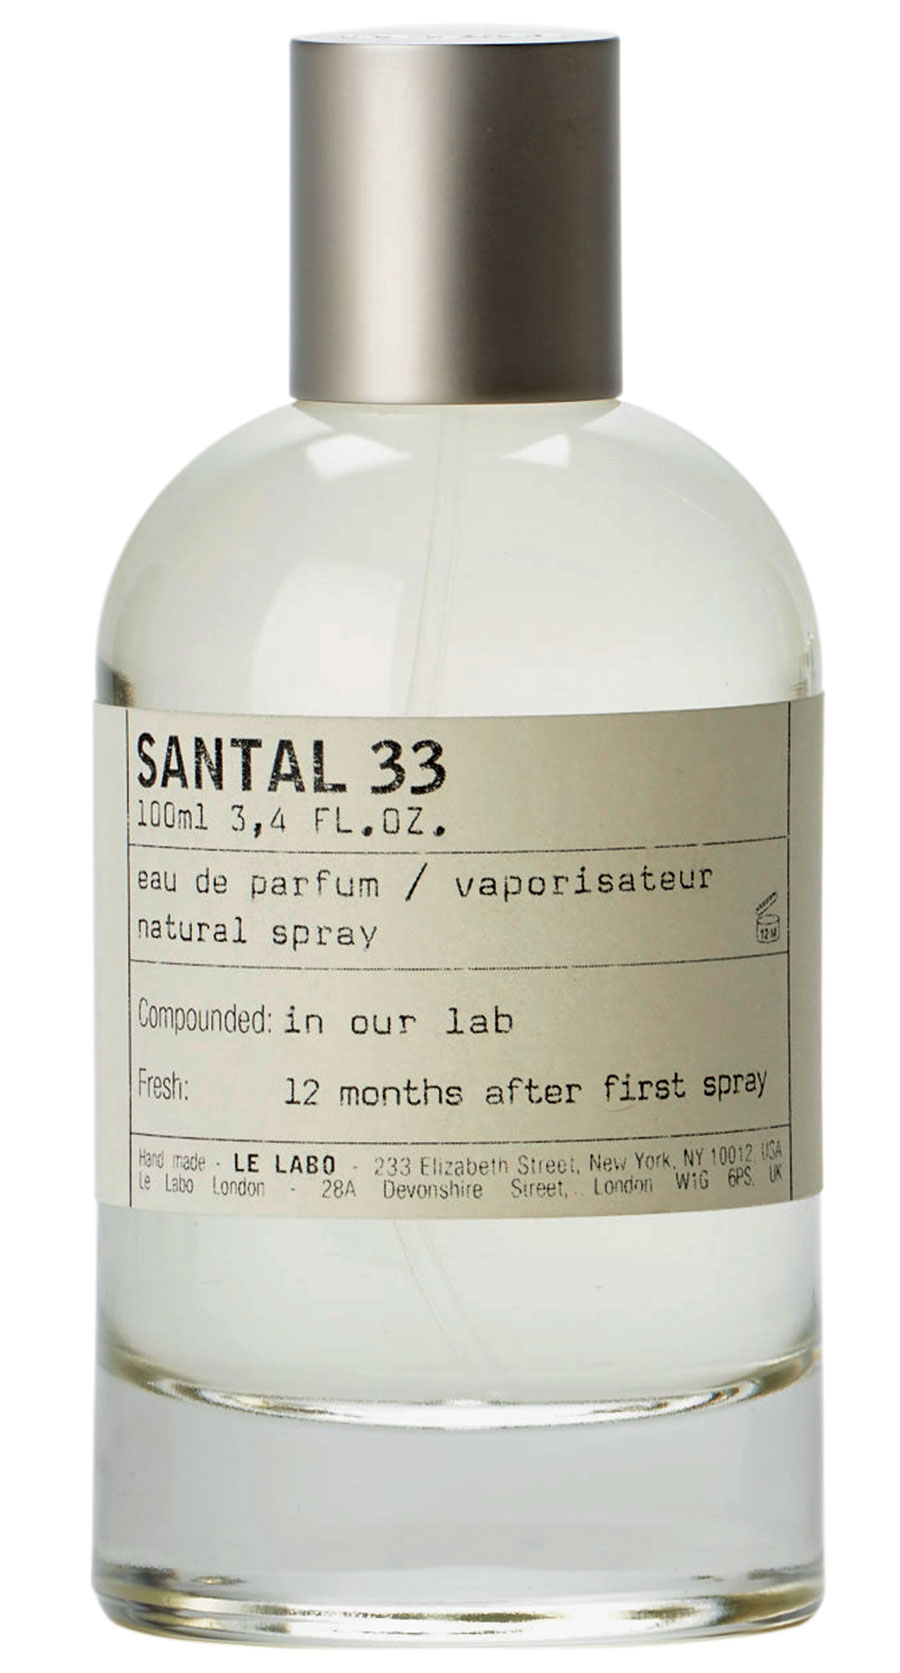 Santal 33 perfume from Le Labo